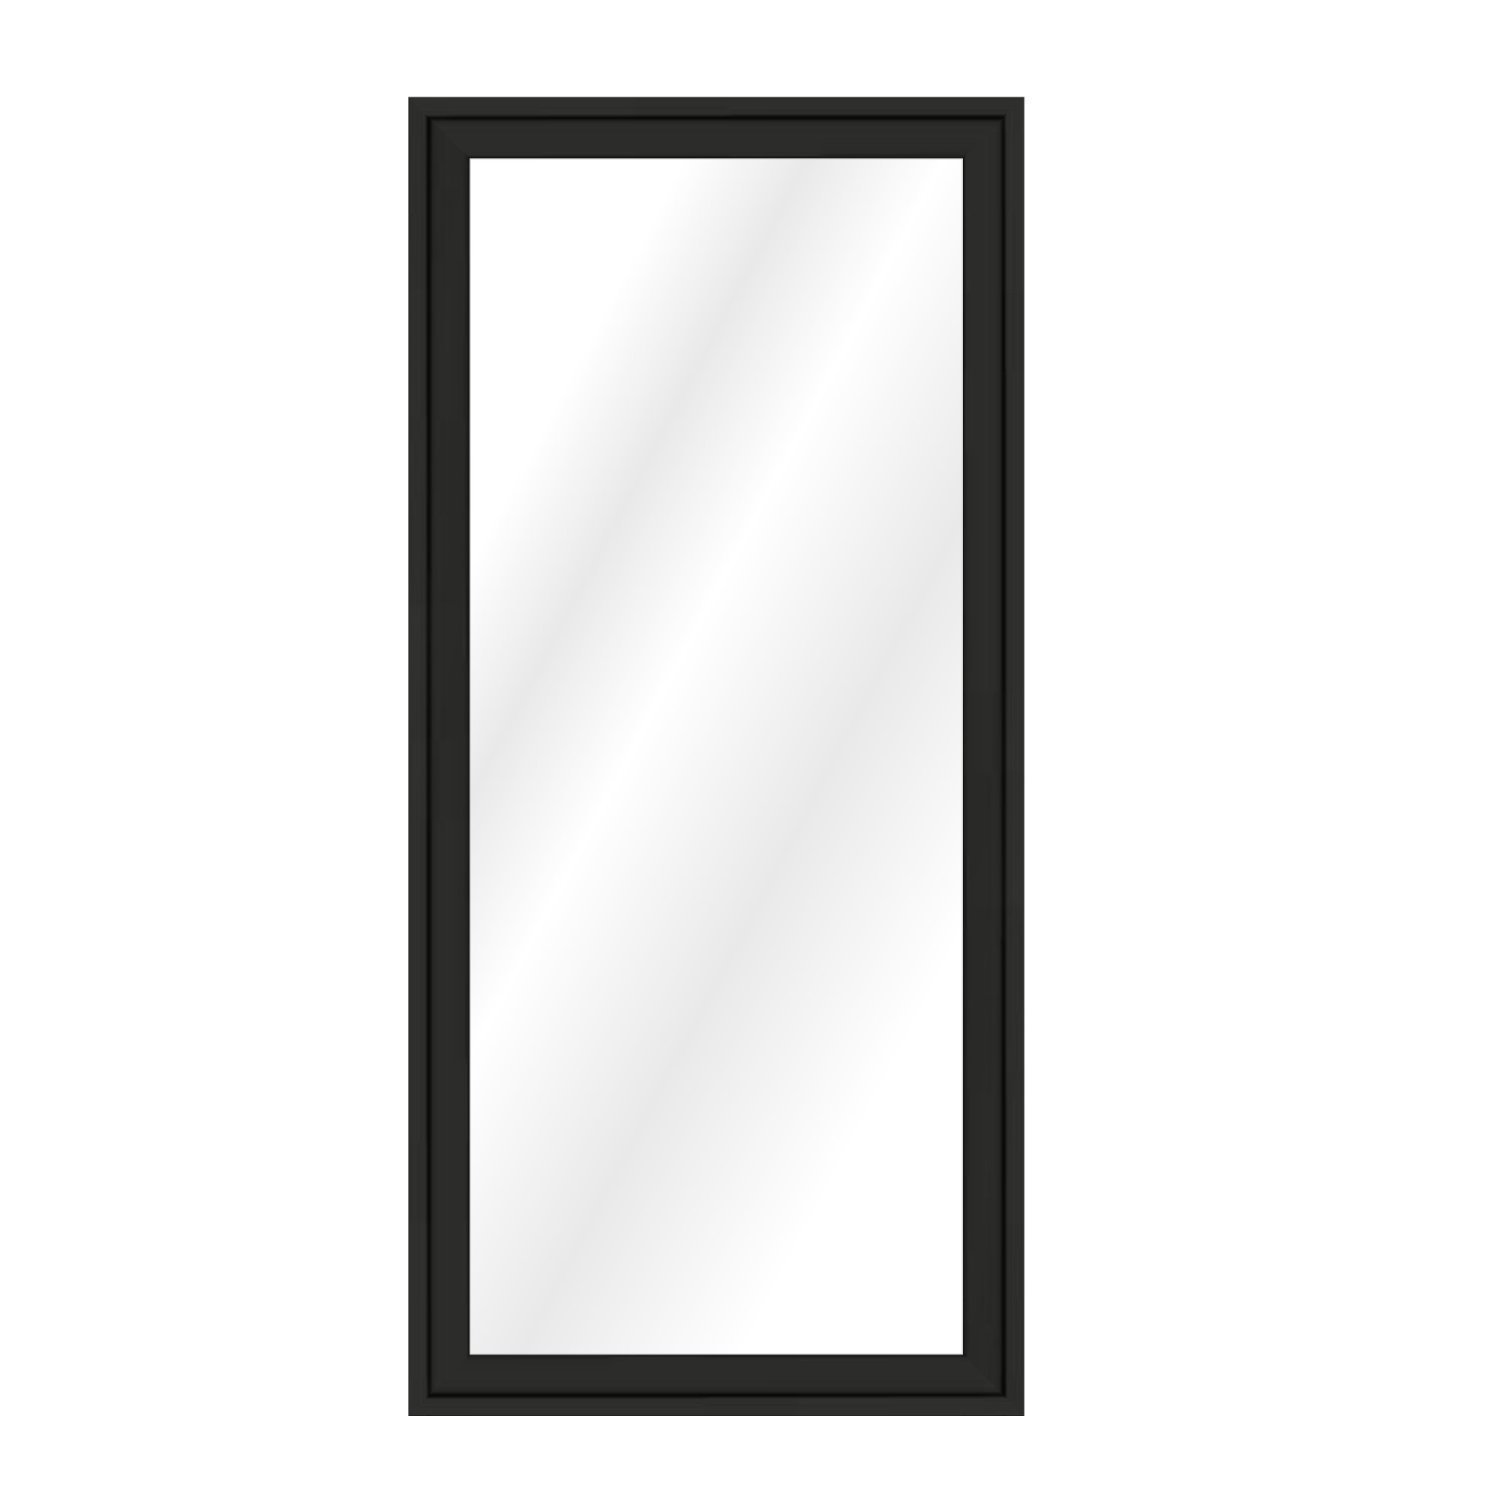 Espelho Elegant 150pt 70cm X 150cm